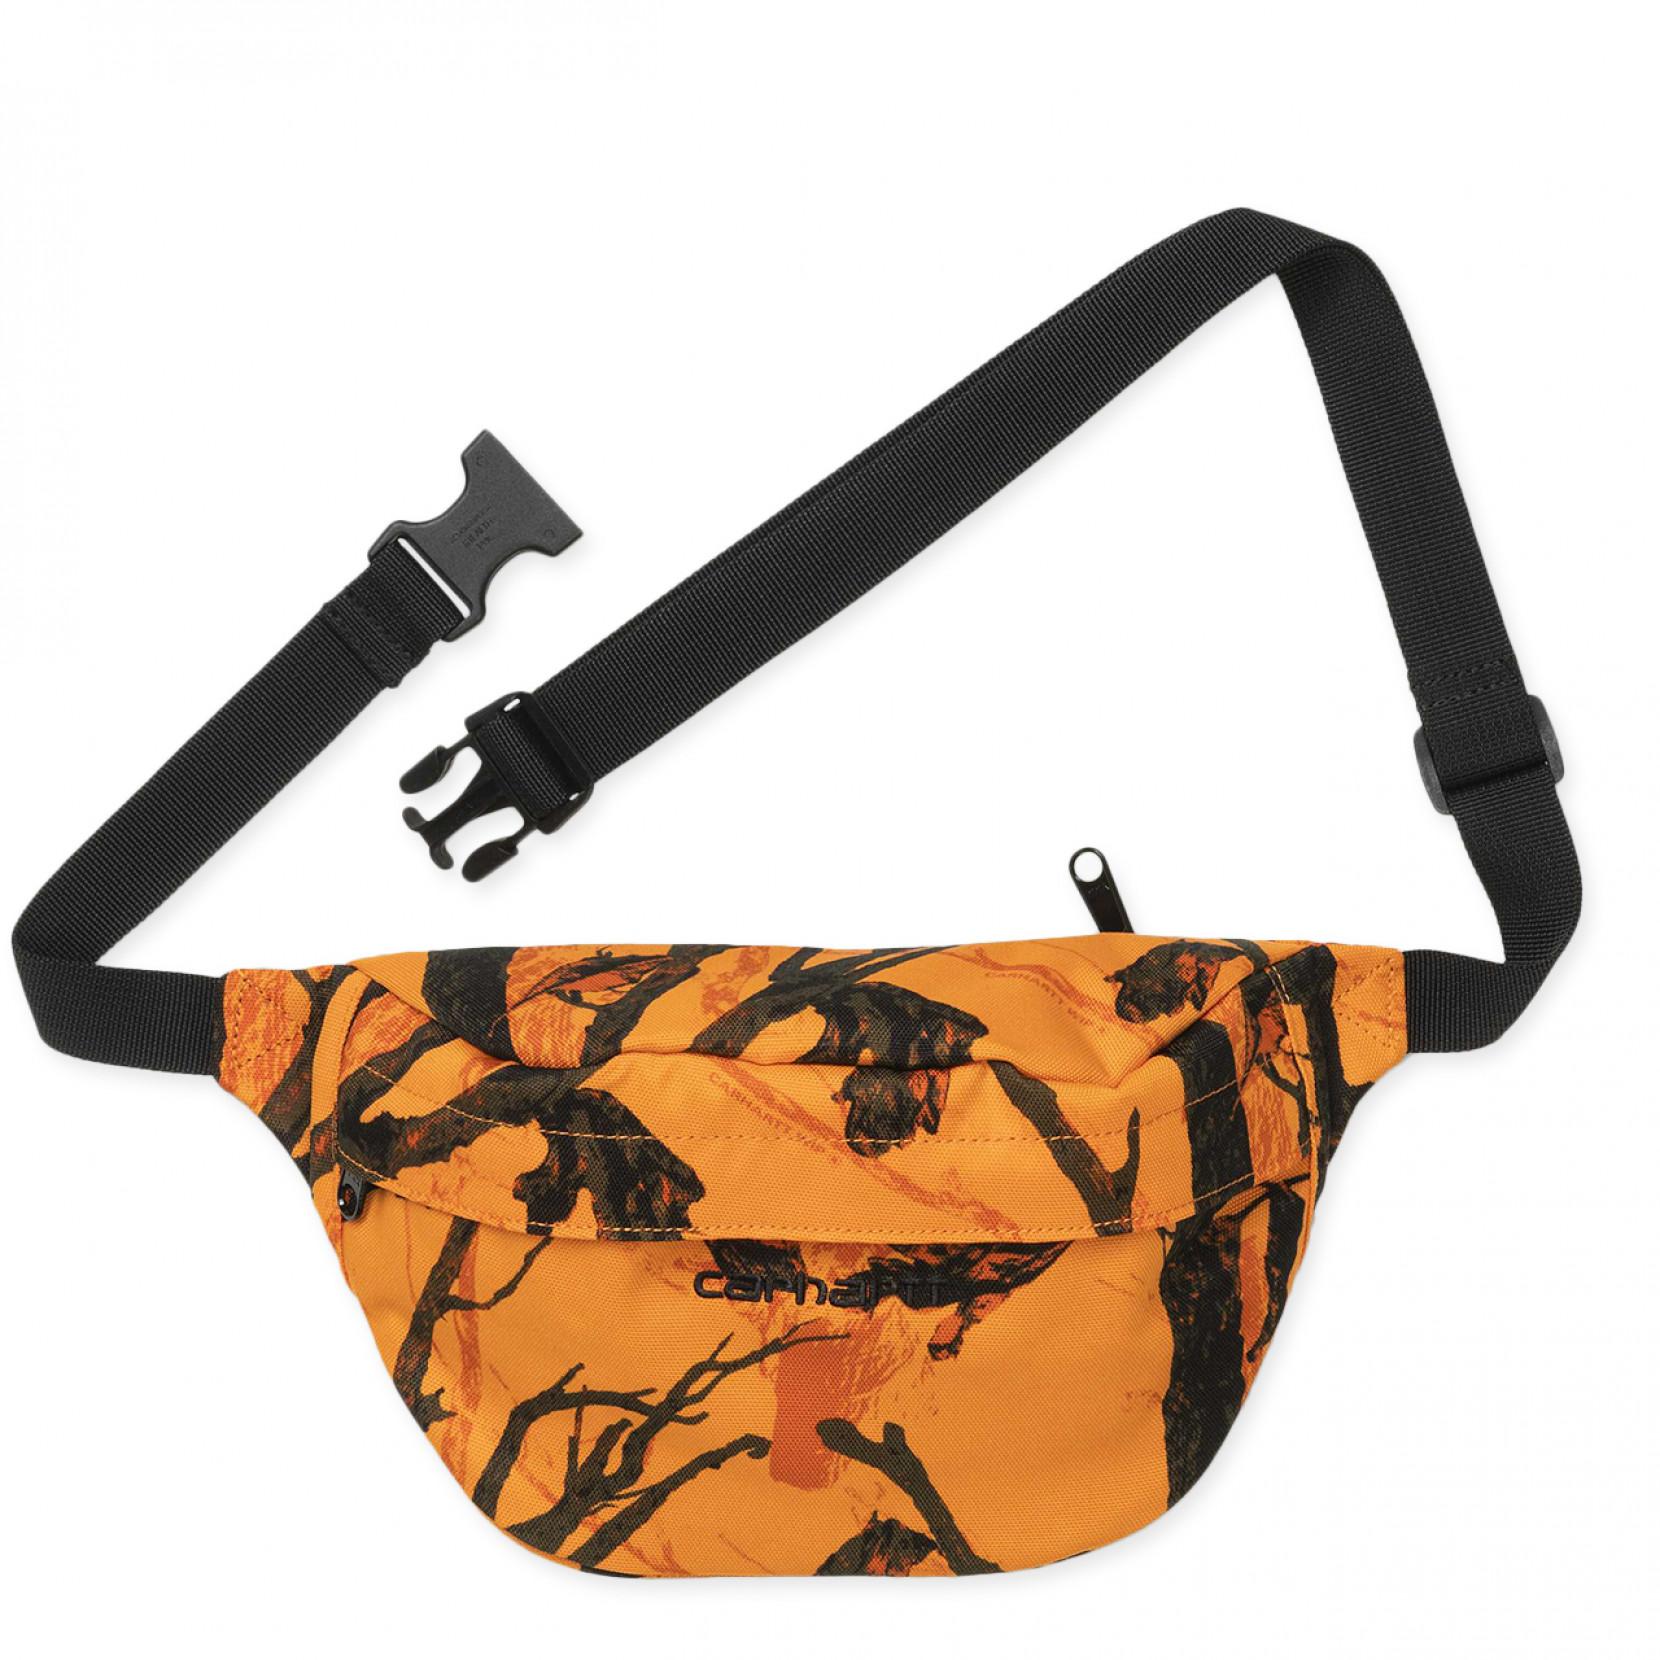 Carhartt WIP Synthetic Payton Hip Bag in Orange for Men - Lyst